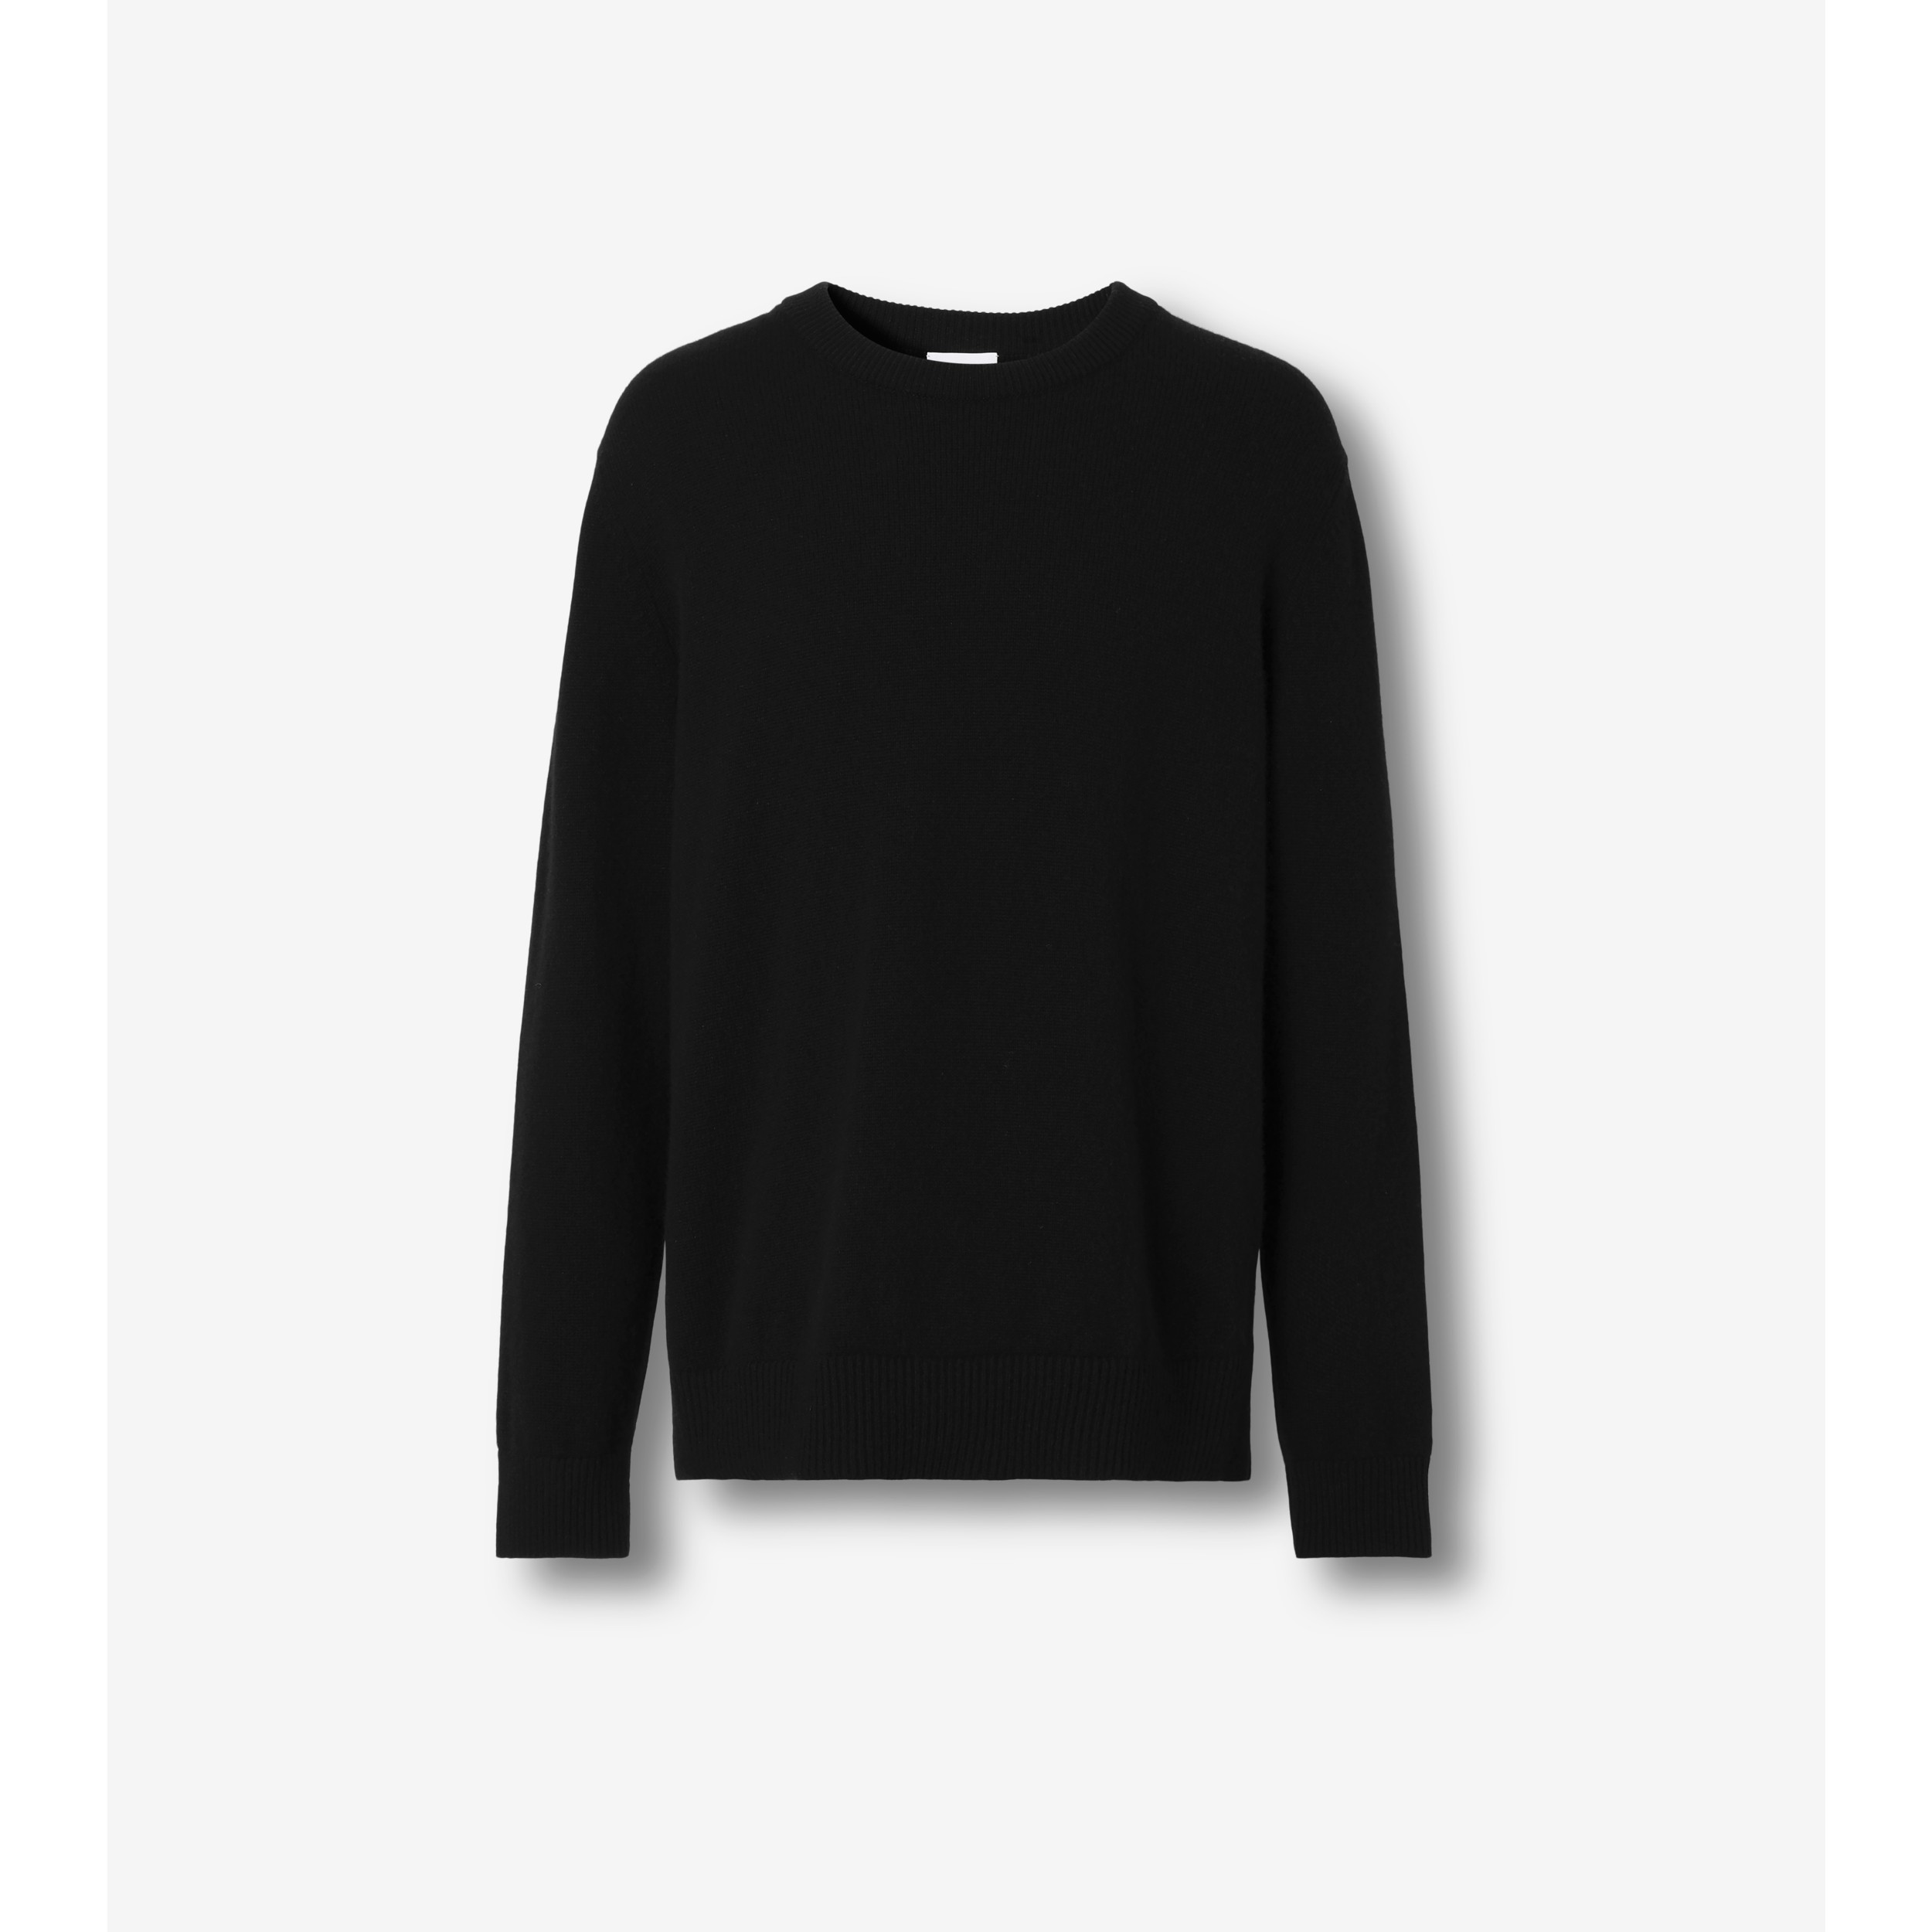 Burberry Black & White Monogram Sweater